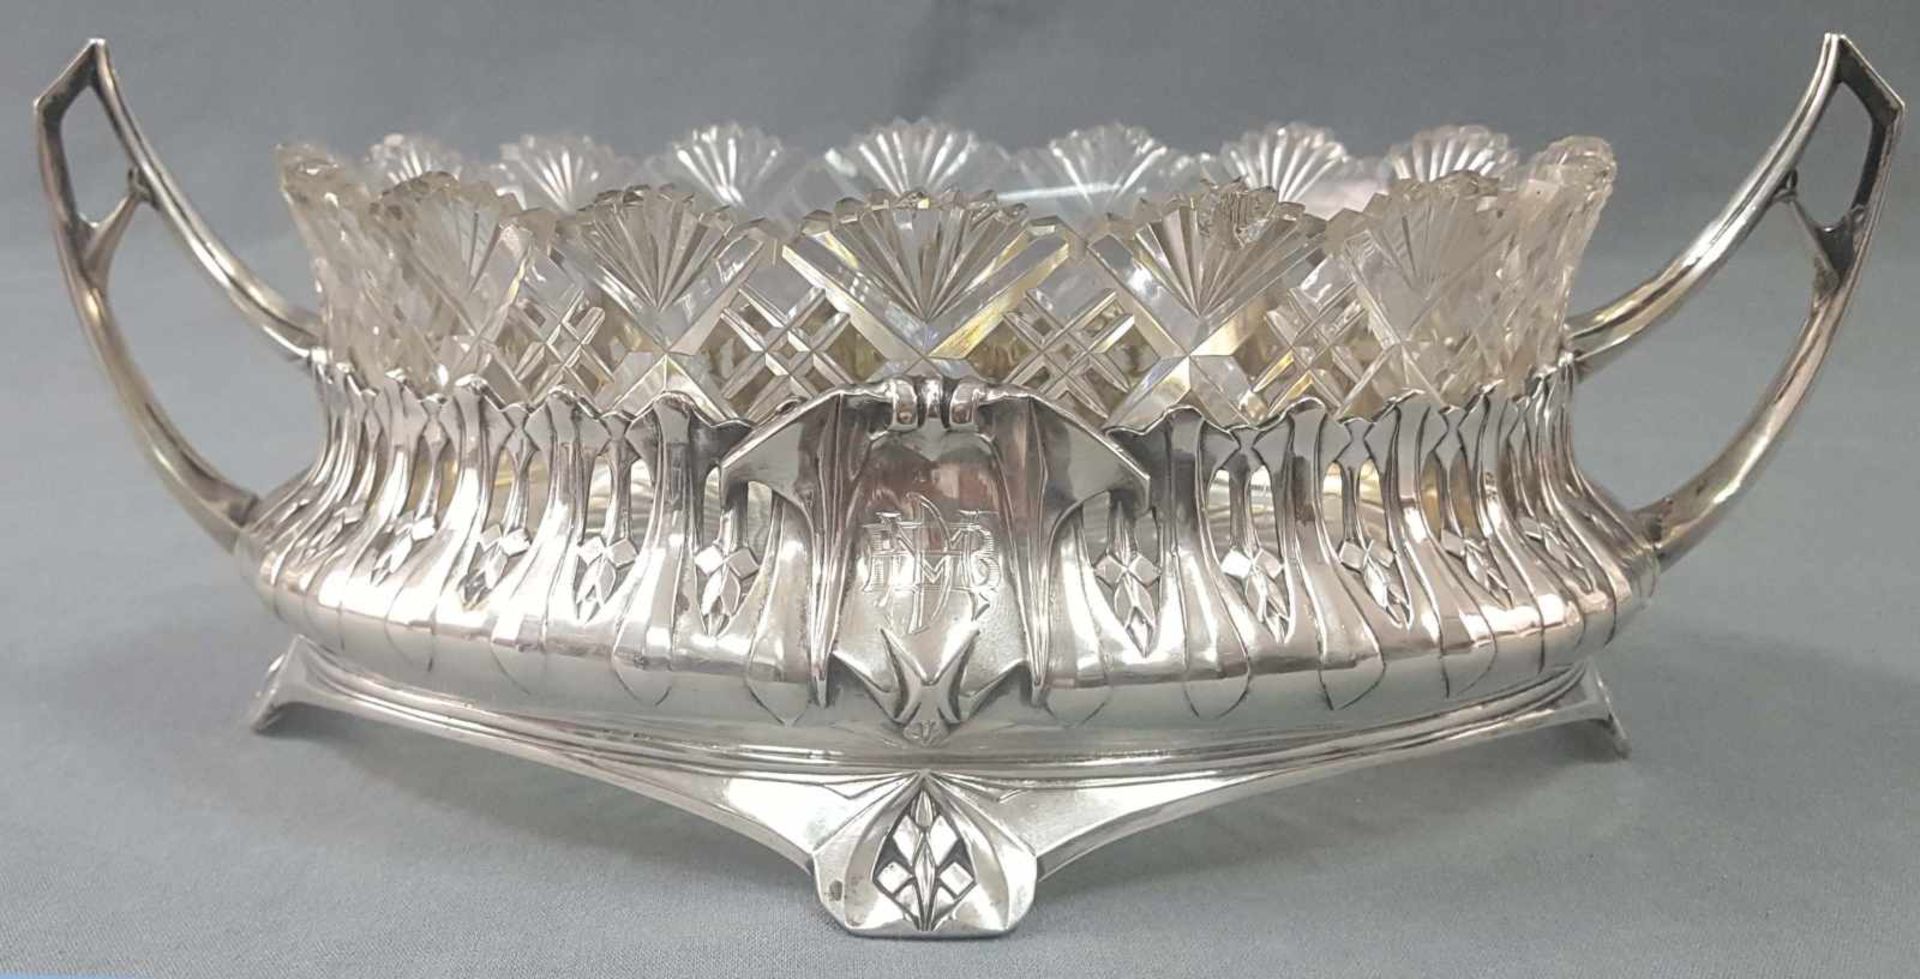 Jardiniere. Silver with original lead crystal glas insert.